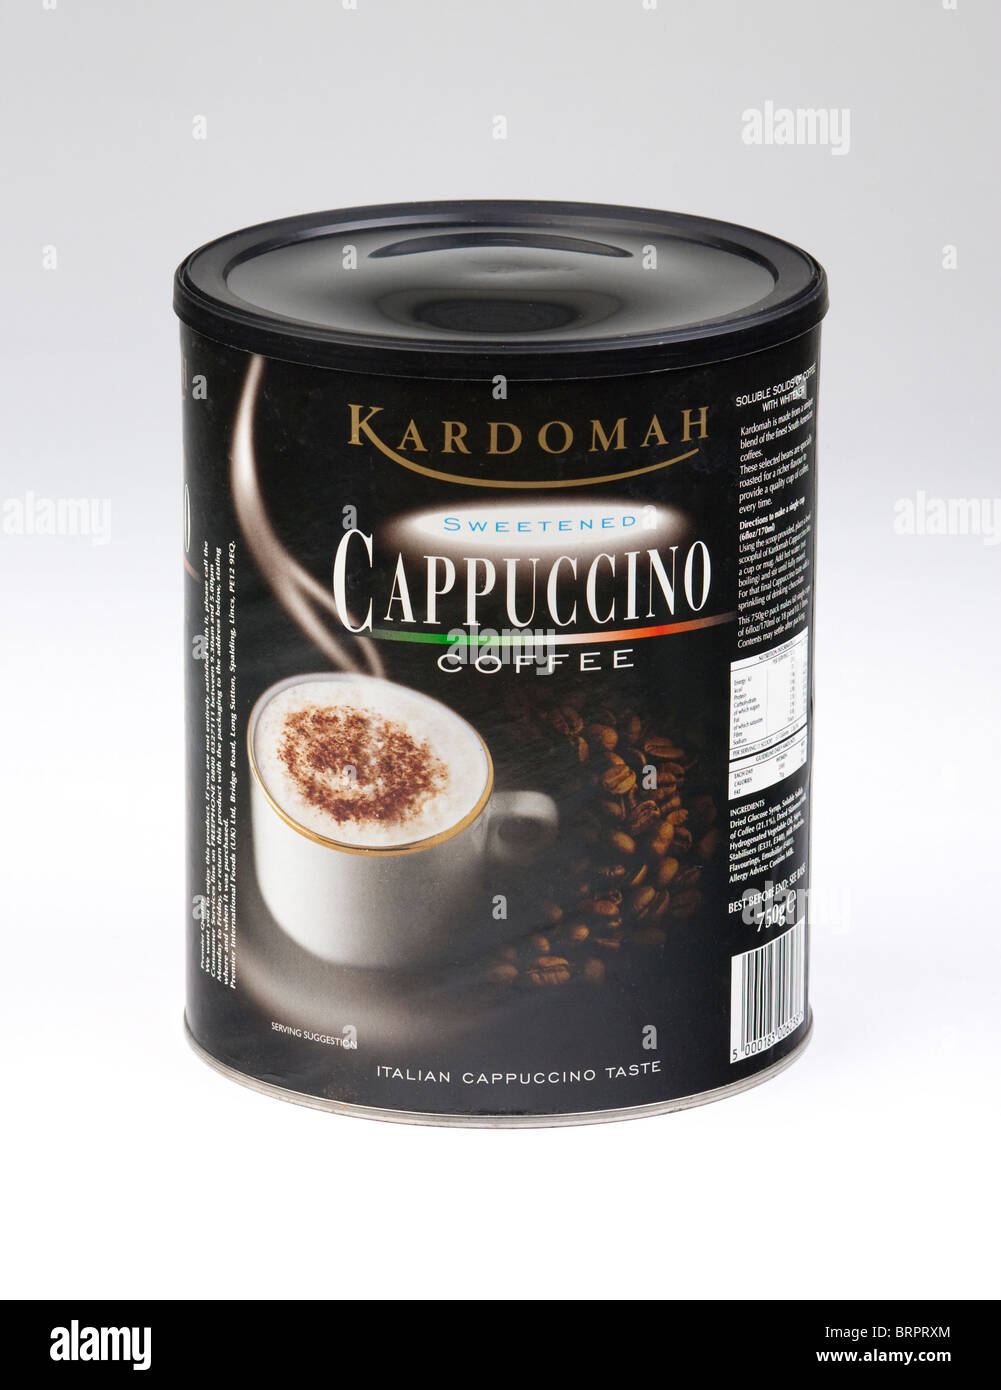 Kardomah Cappuccino caffè miscela in polvere Foto Stock